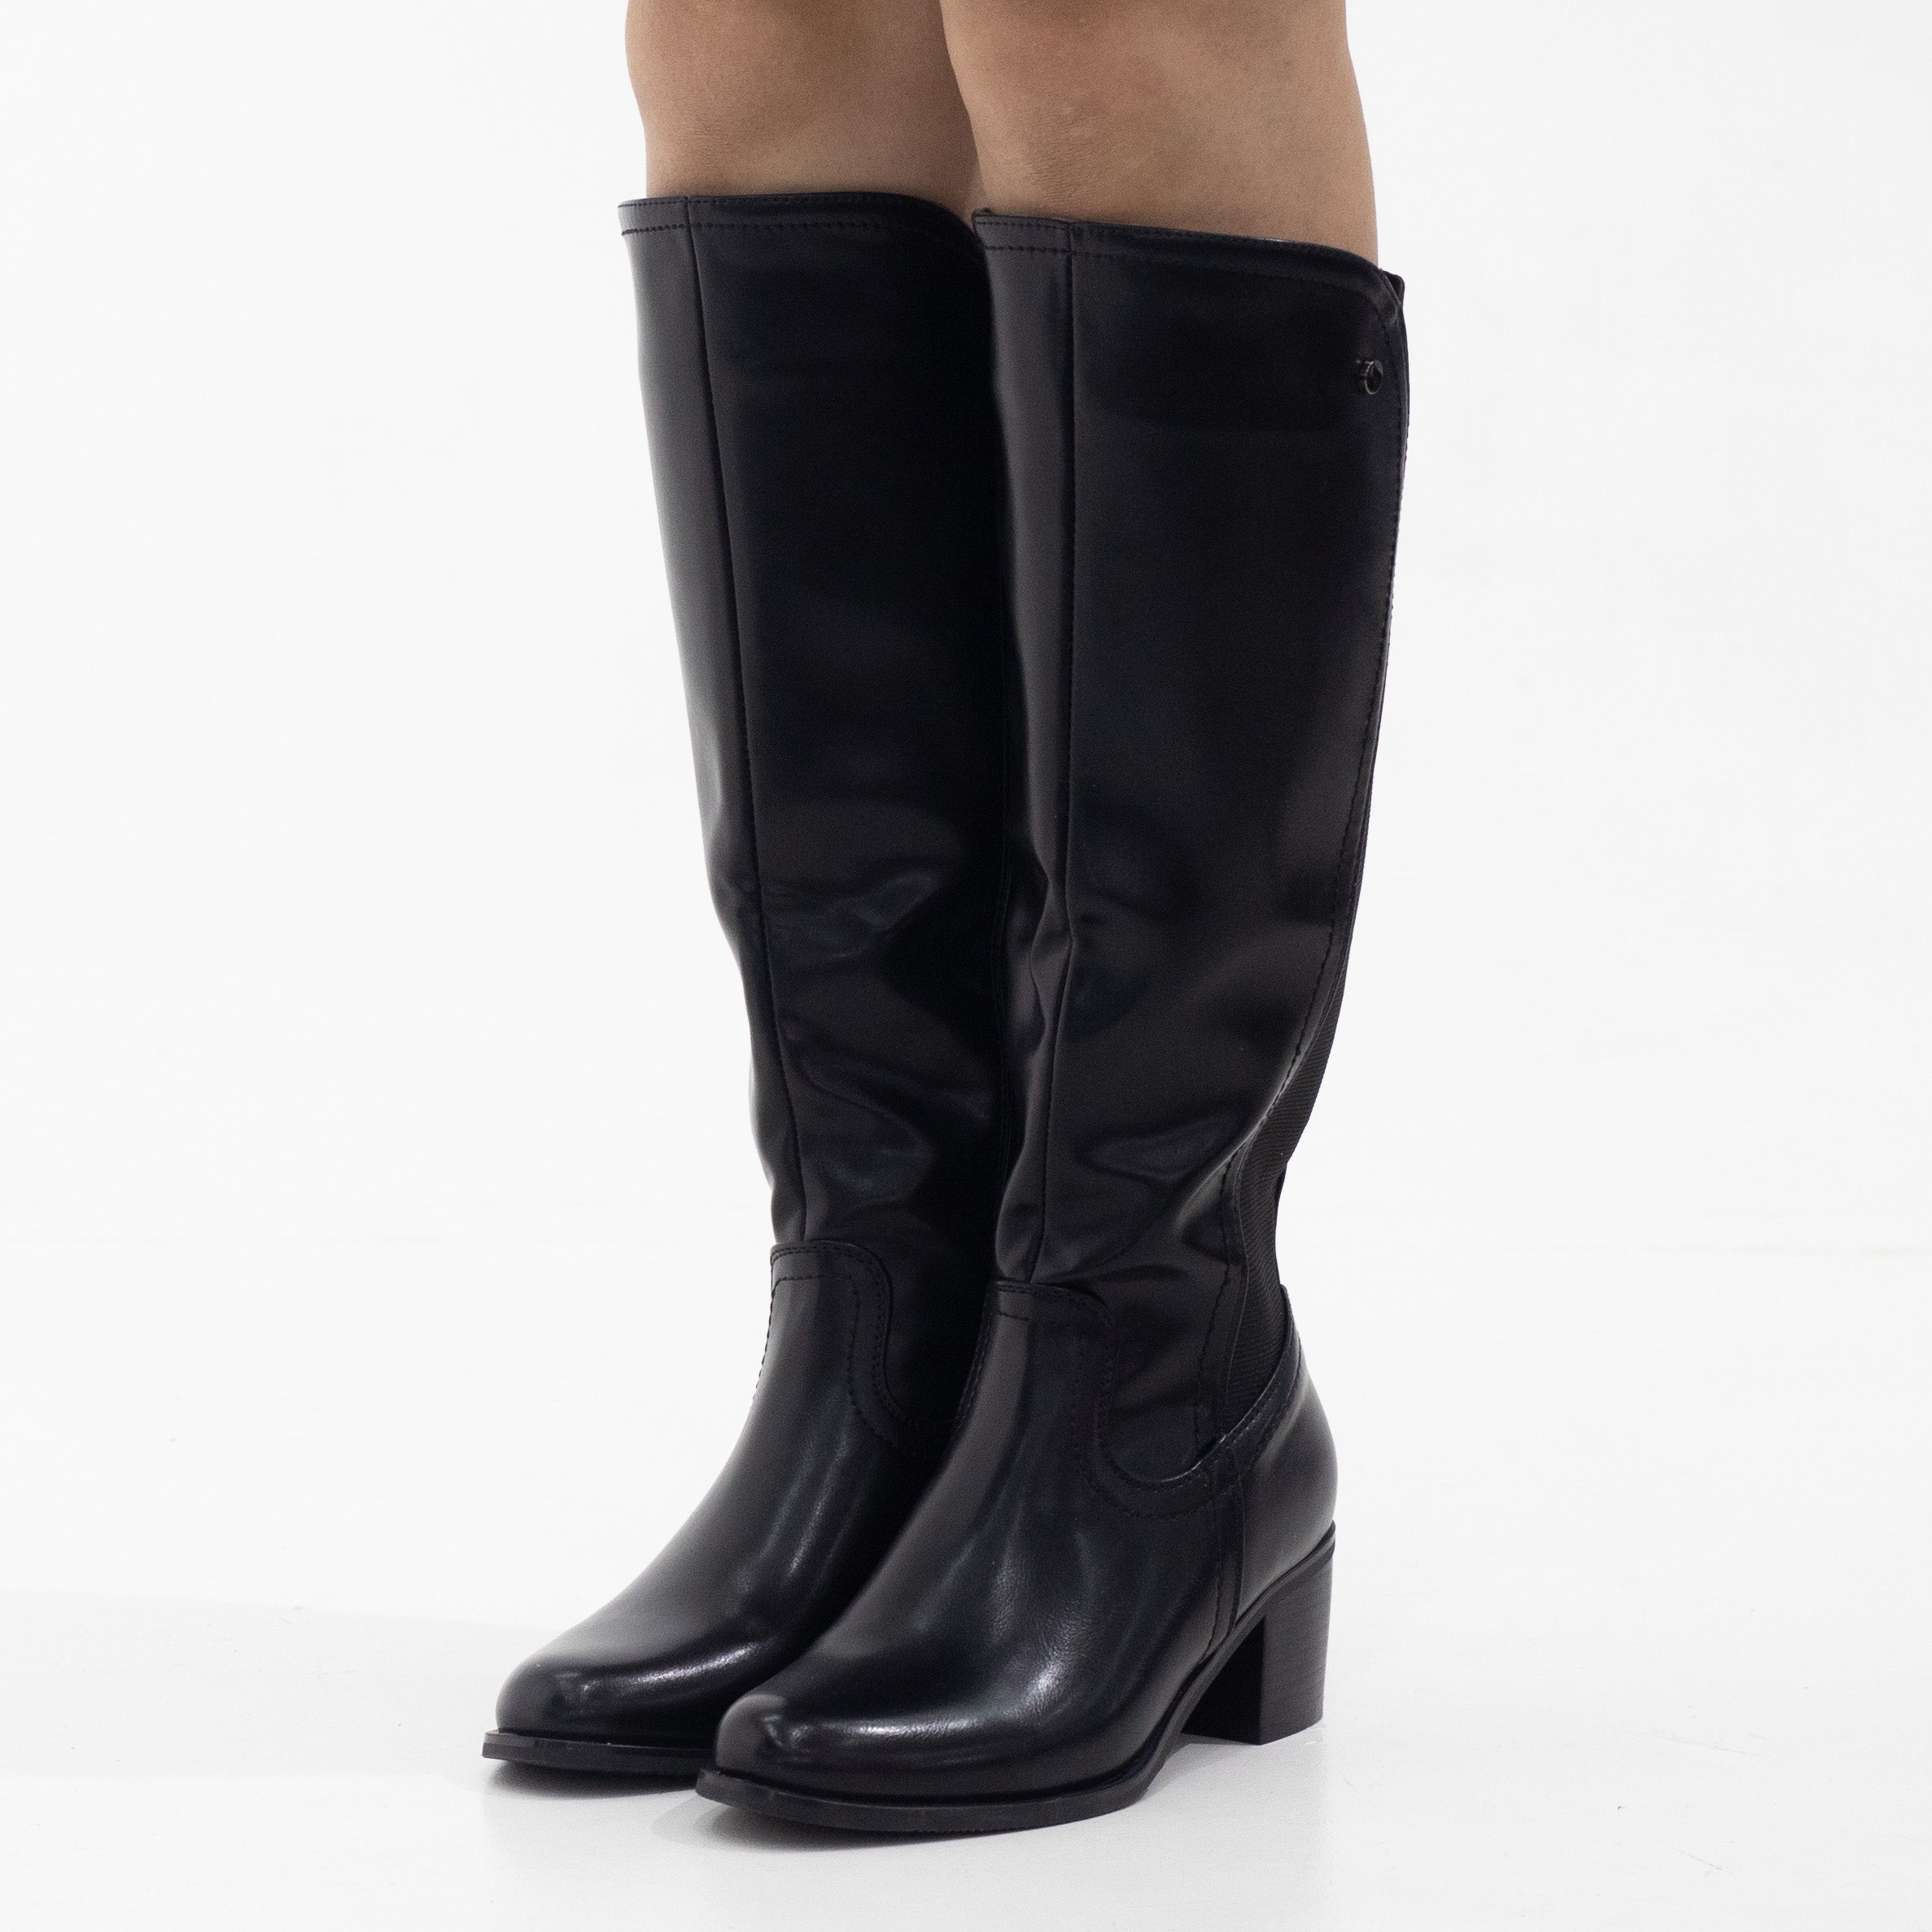 Yada knee high with elastic mat back boots 6cm heel black